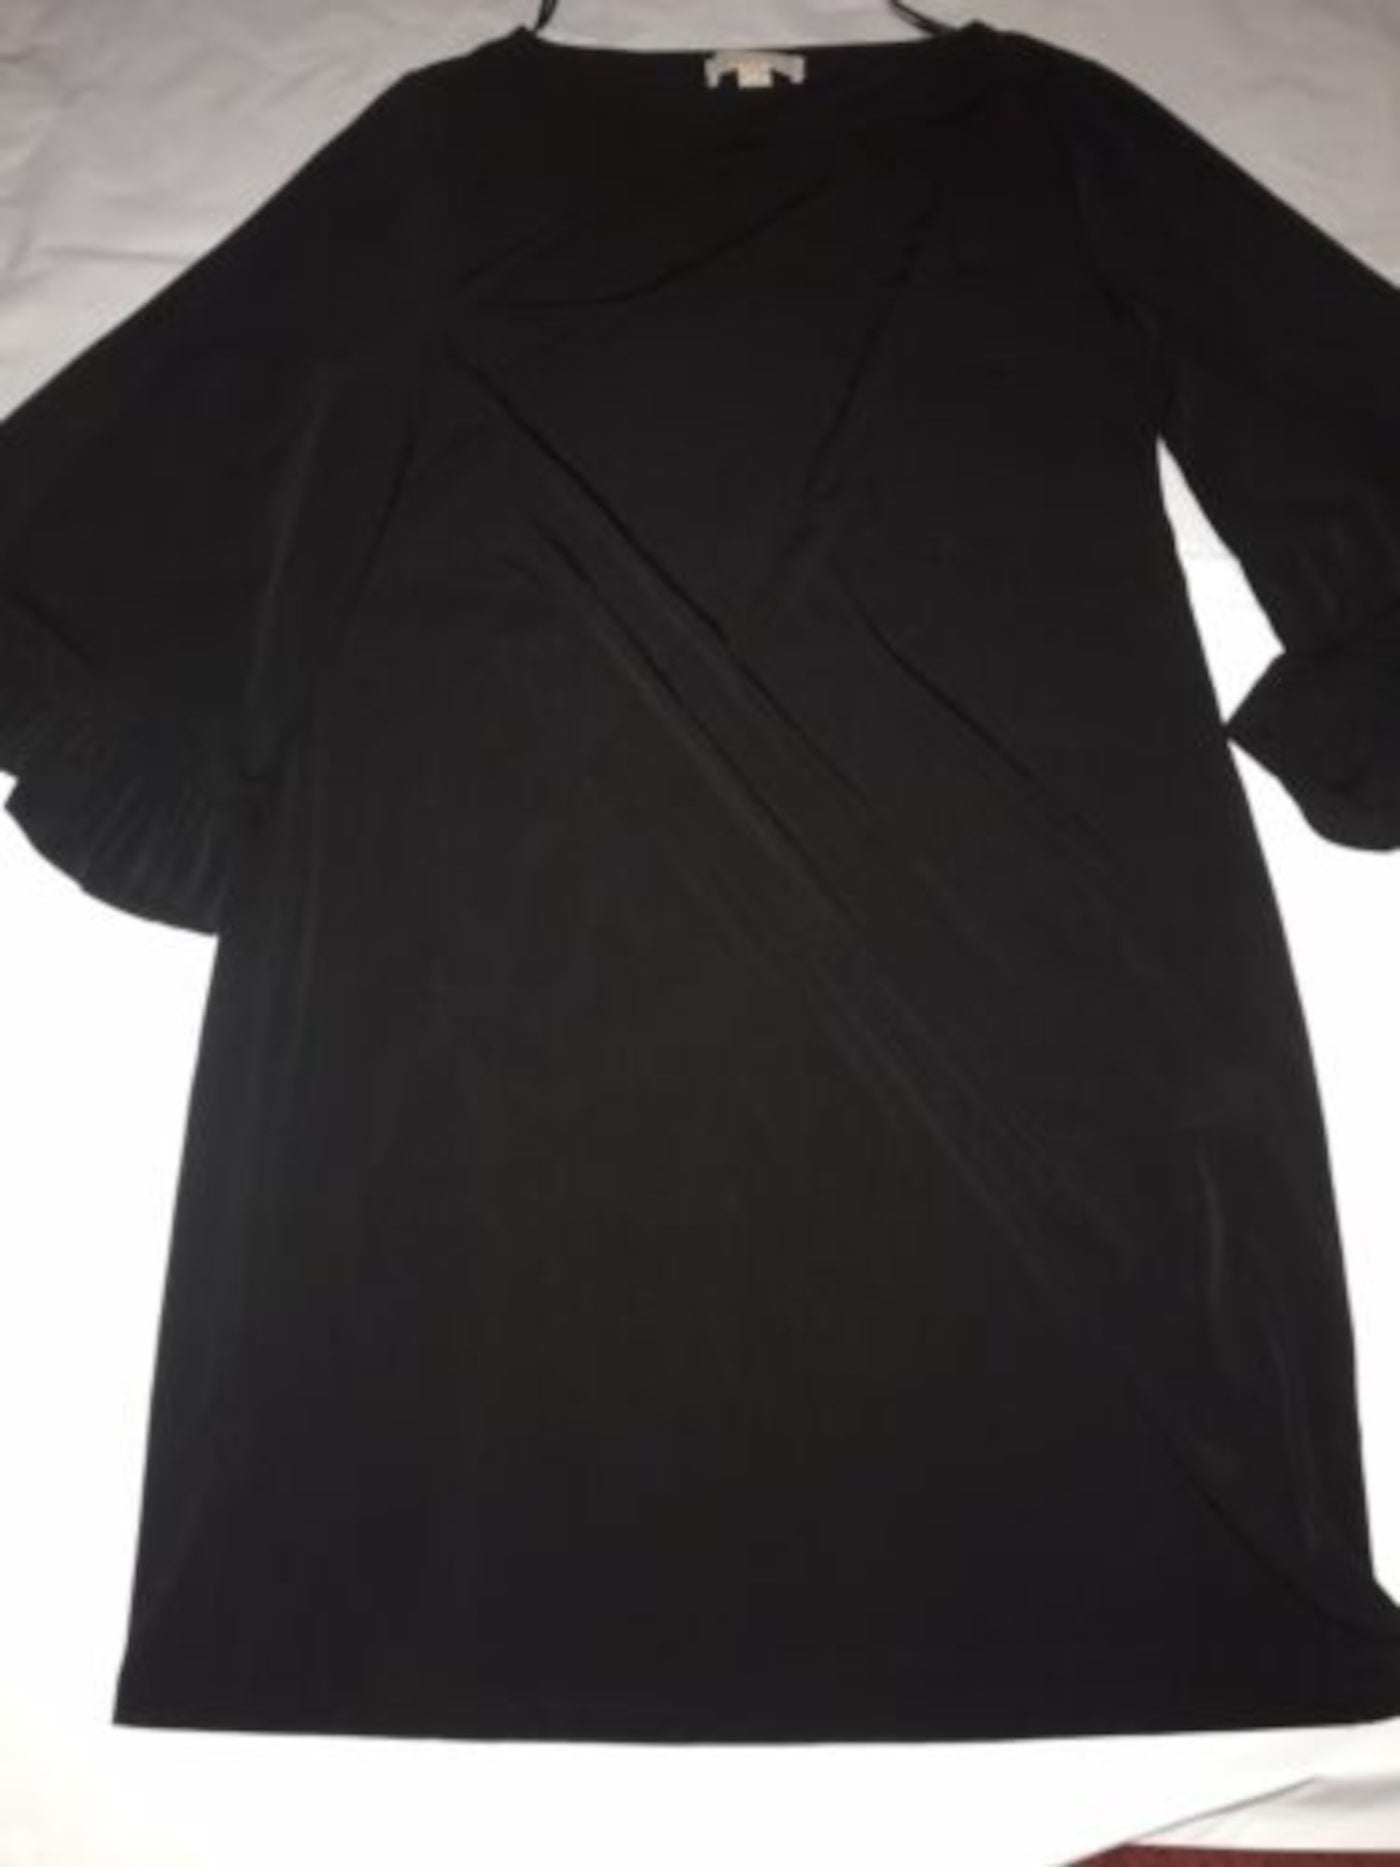 MICHAEL KORS Womens Black 3/4 Sleeve Round Neck Knee Length Shift Dress Plus 3X